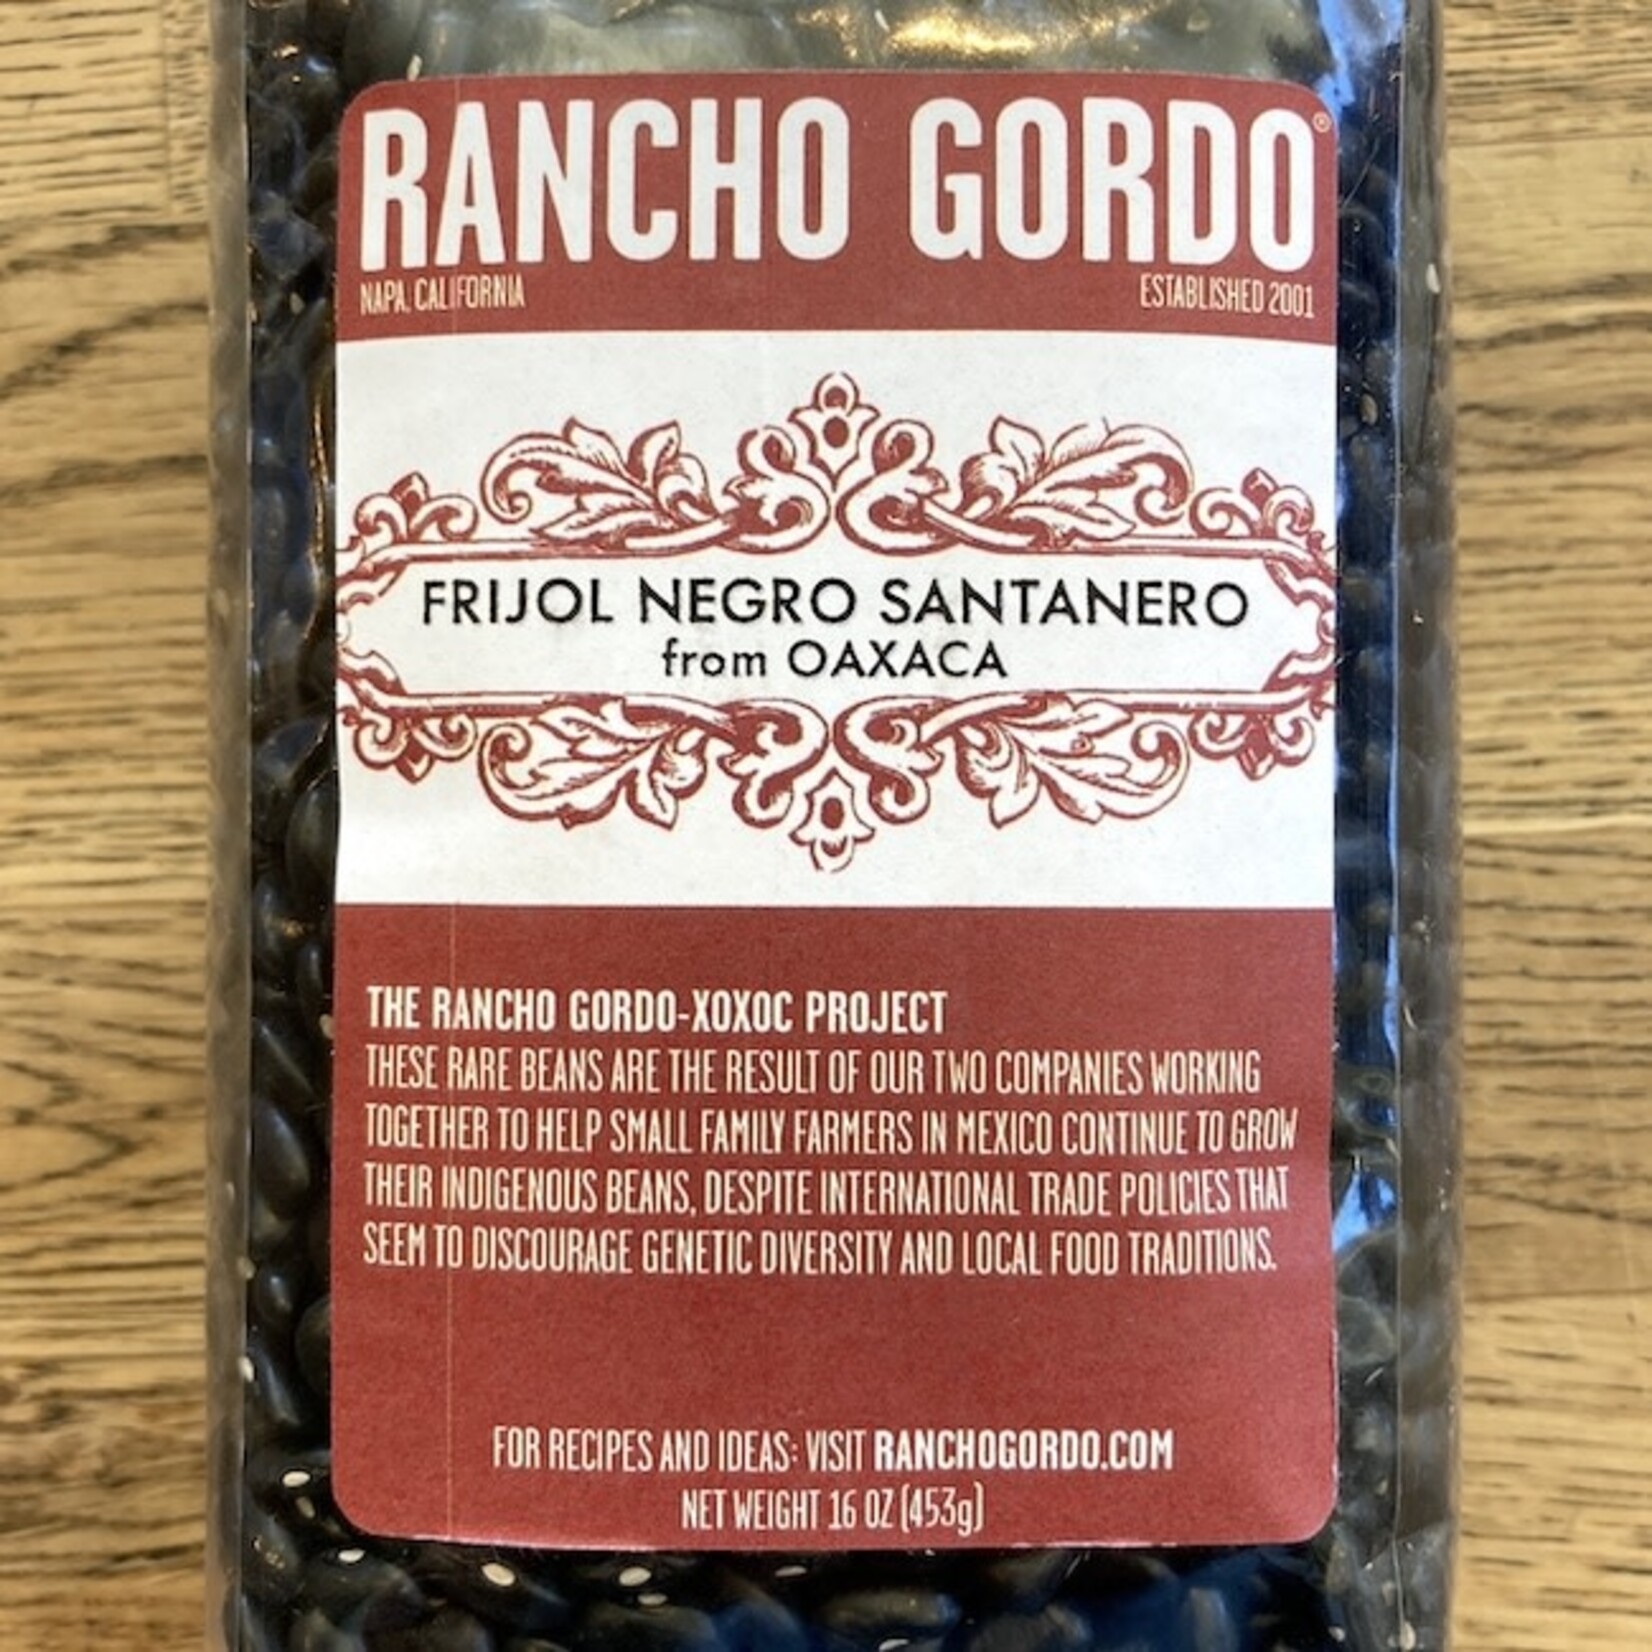 USA Rancho Gordo Frijol Negro Santanero (Oaxaca)